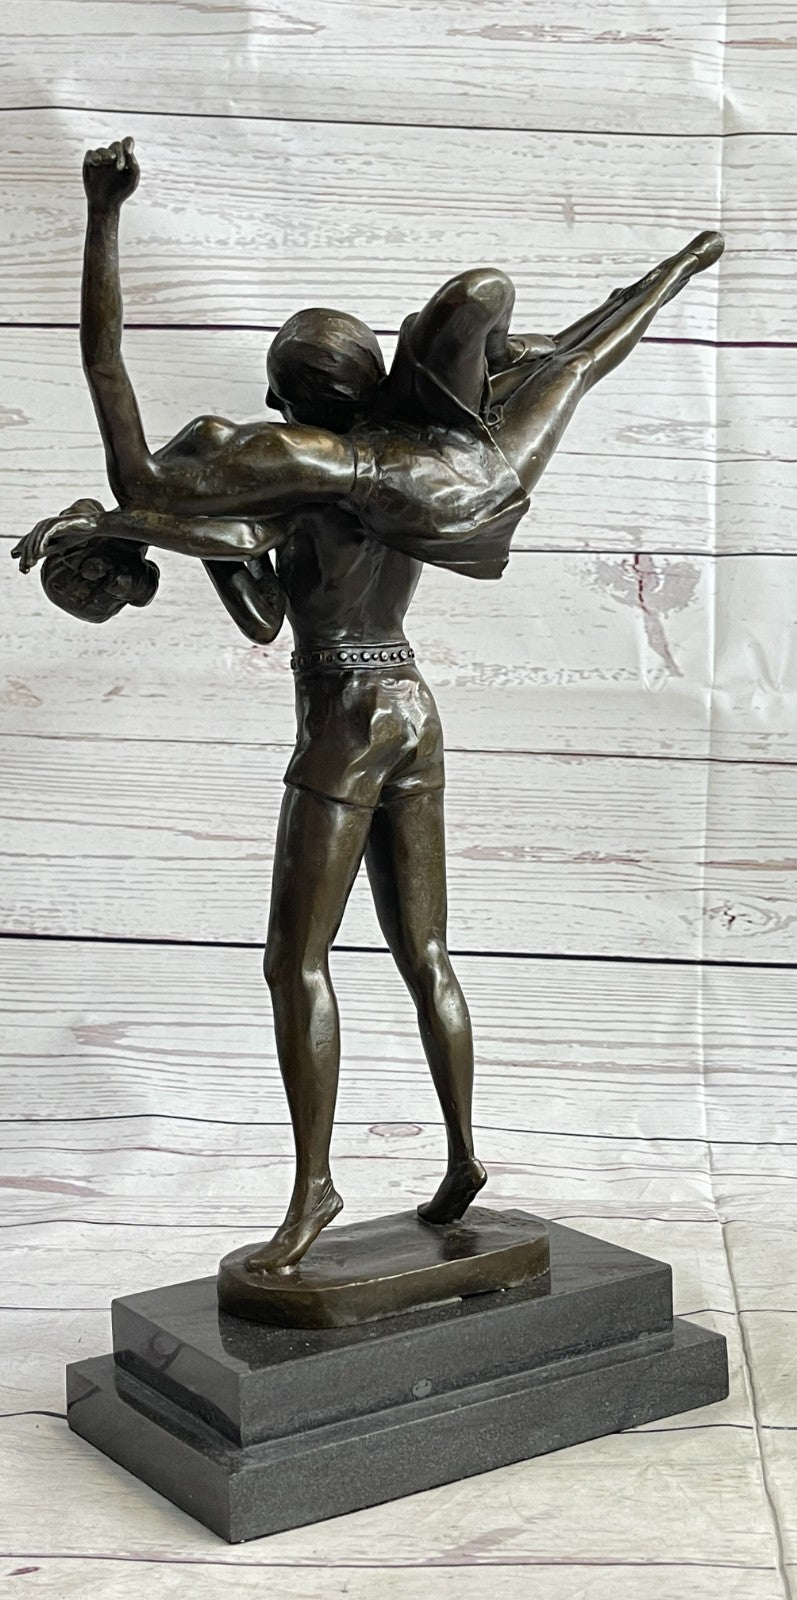 Handcrafted bronze sculpture SALE Dancer Russian Zach~Two Deco~Bruno Art Signed